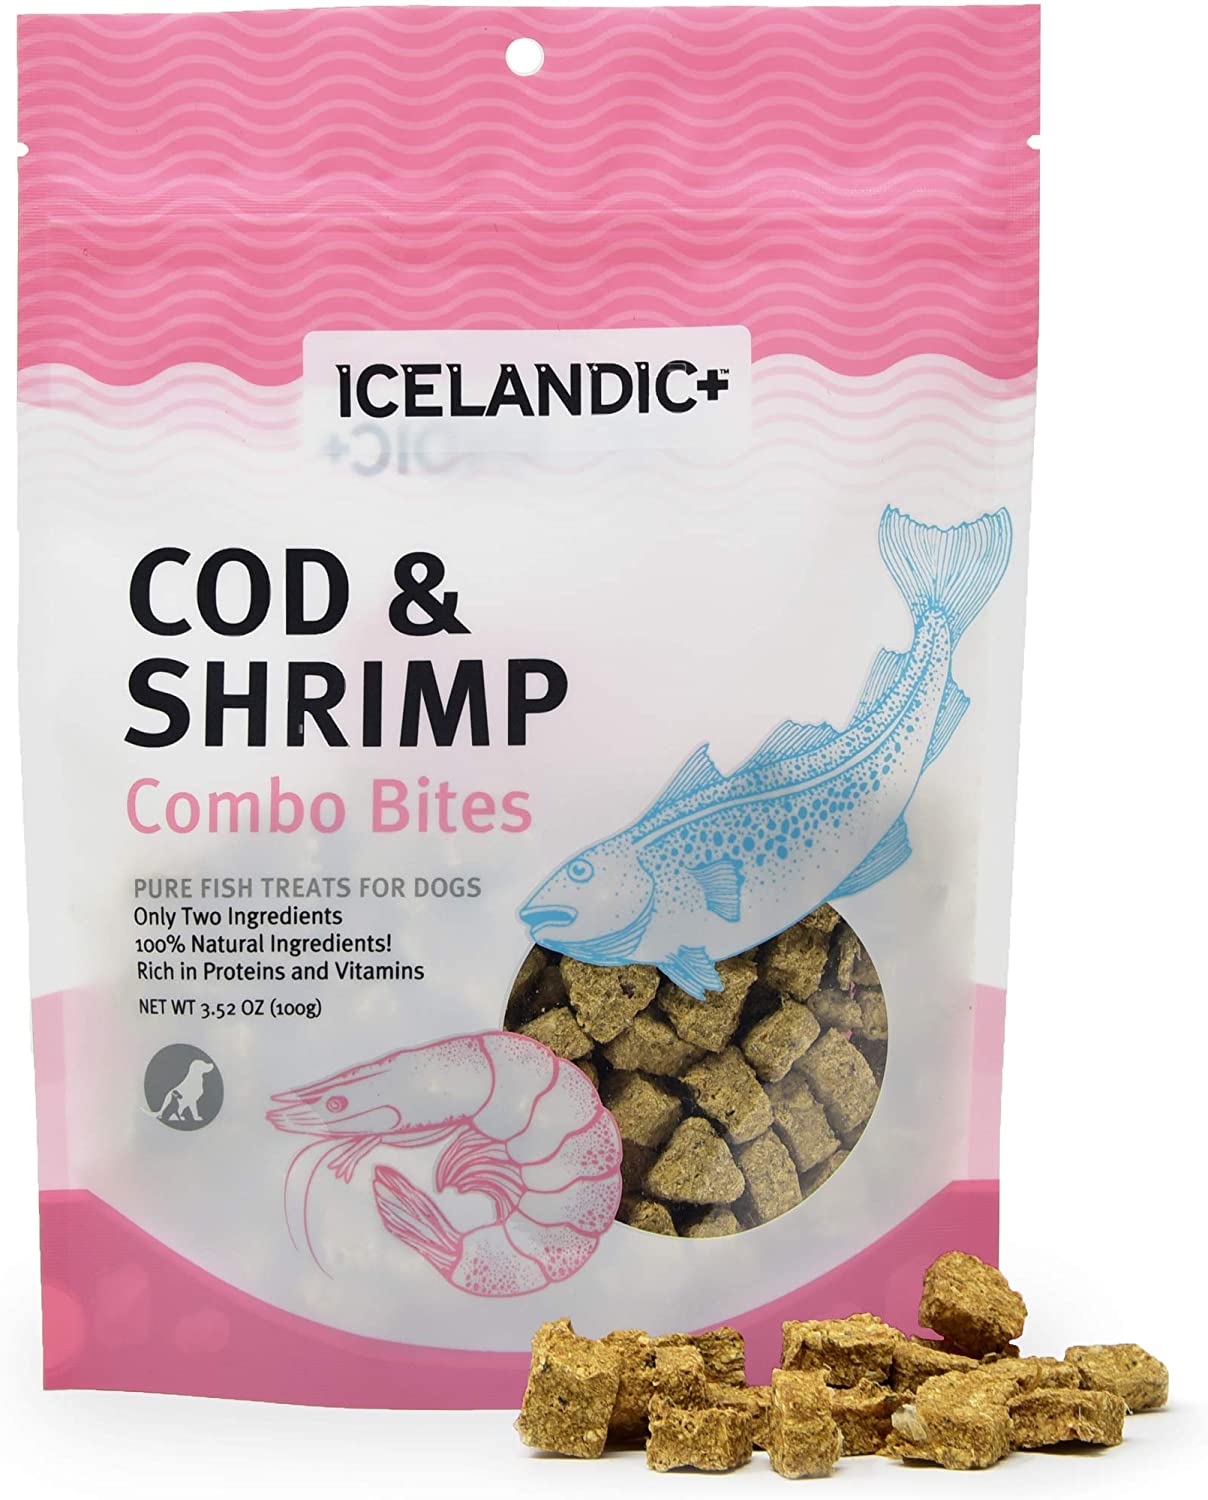 Icelandic+ All-Natural Dog Chew Treats Combo Bites Cod and Shrimp